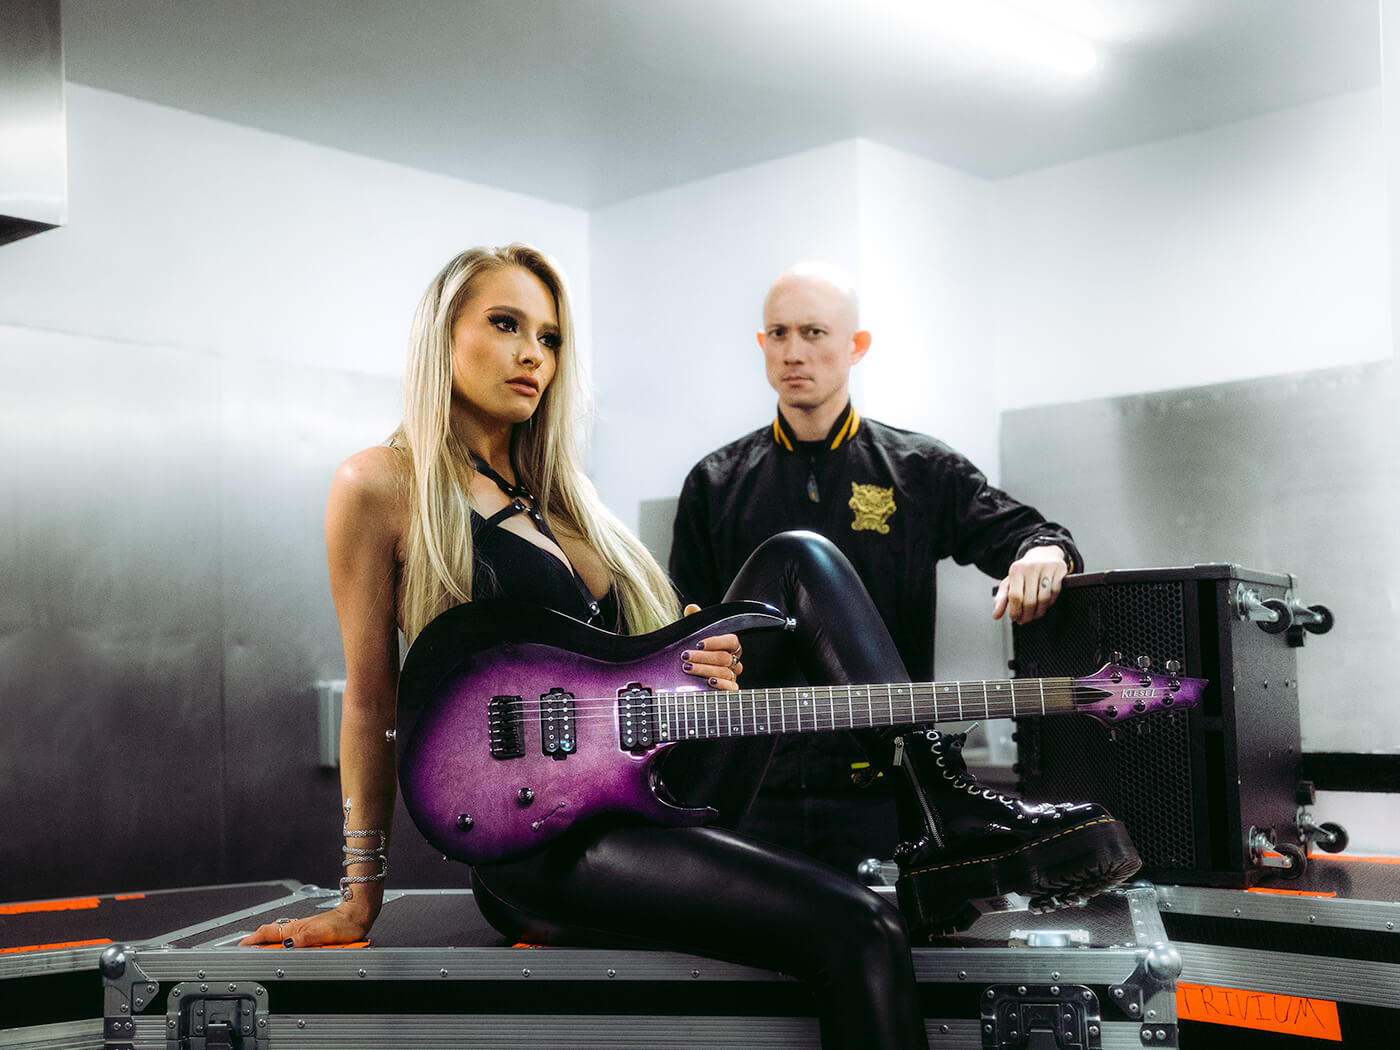 Sophie Lloyd with Kiesel guitar and Matt Heafy of Trivium